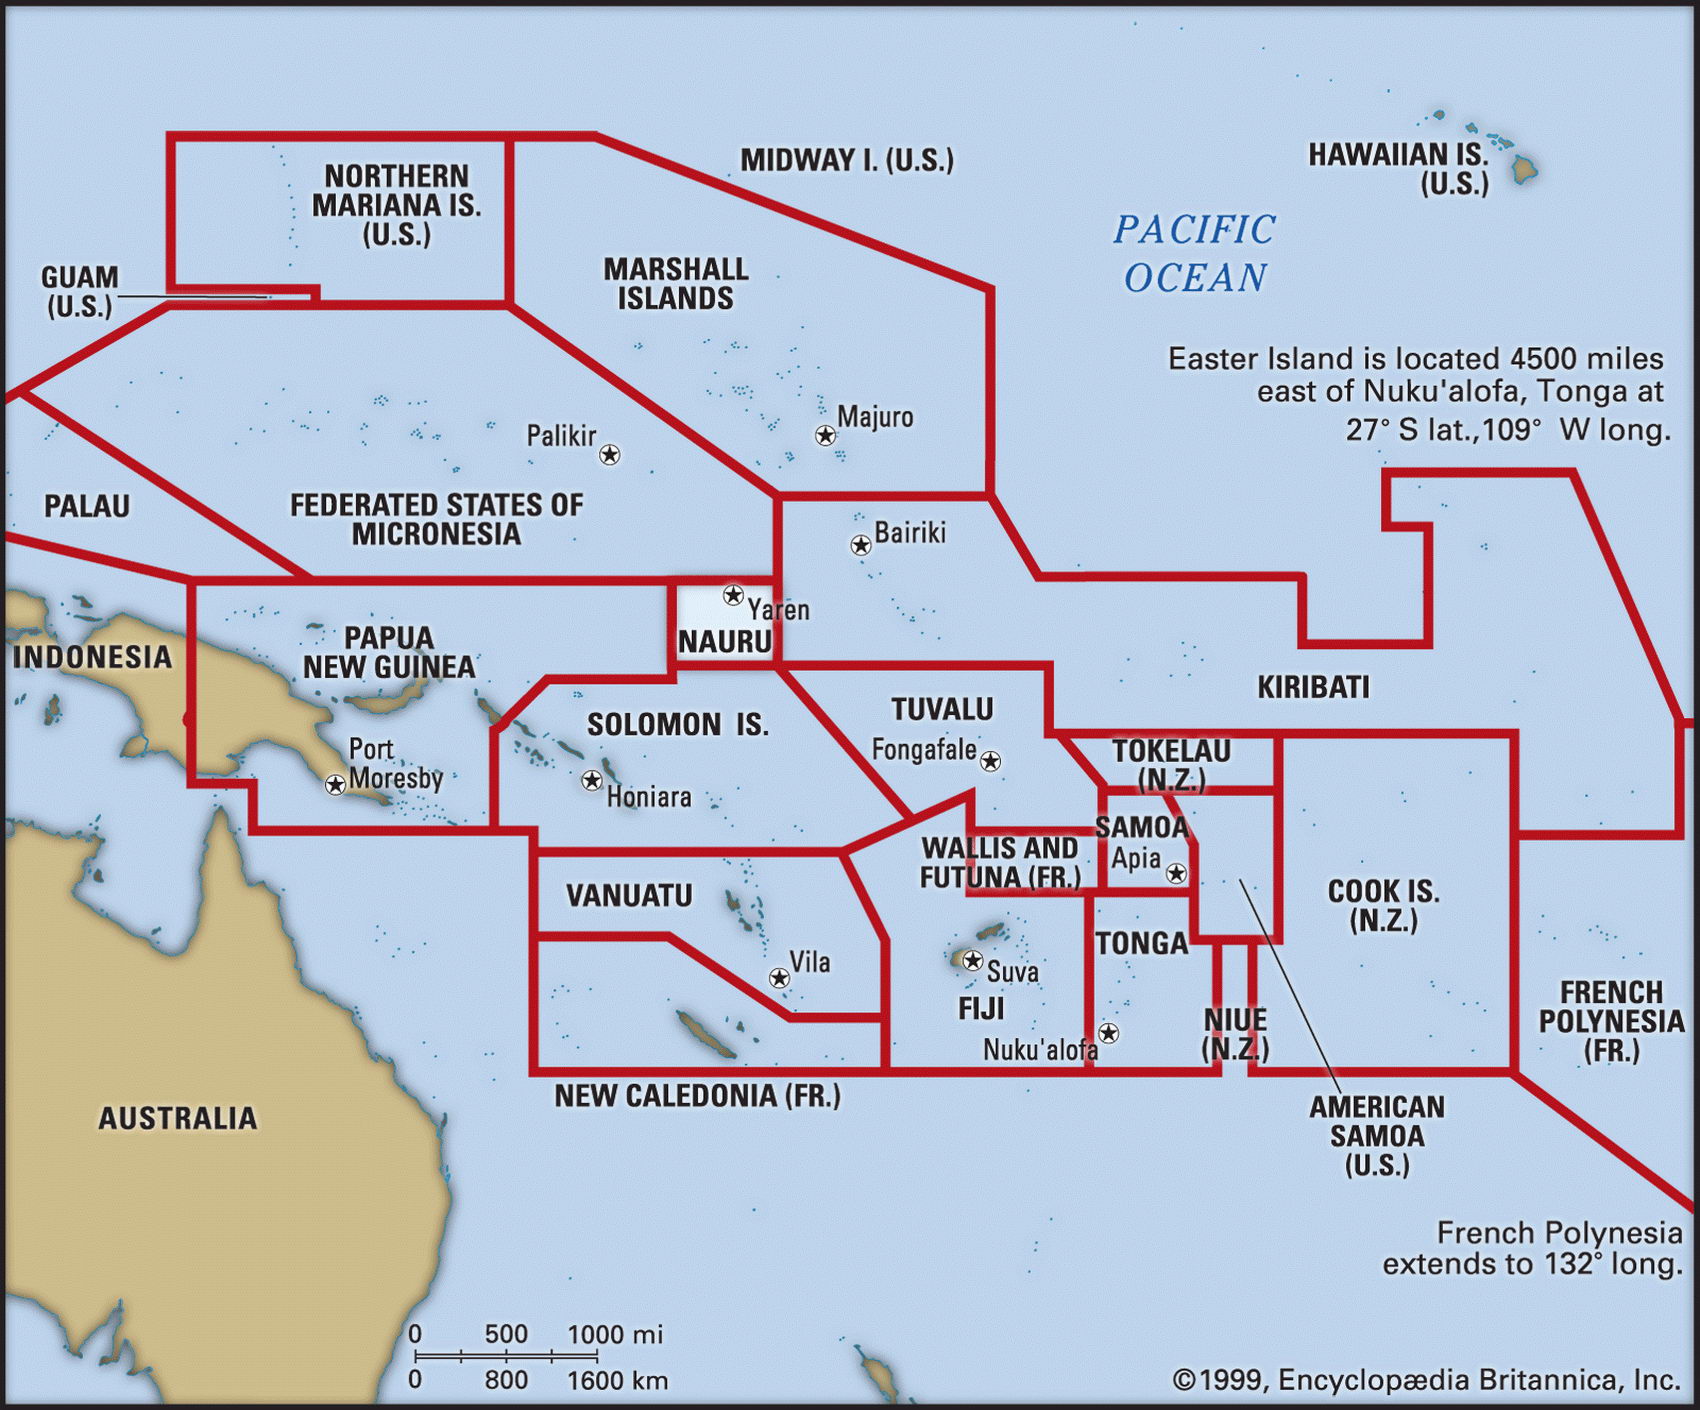 Nauru map